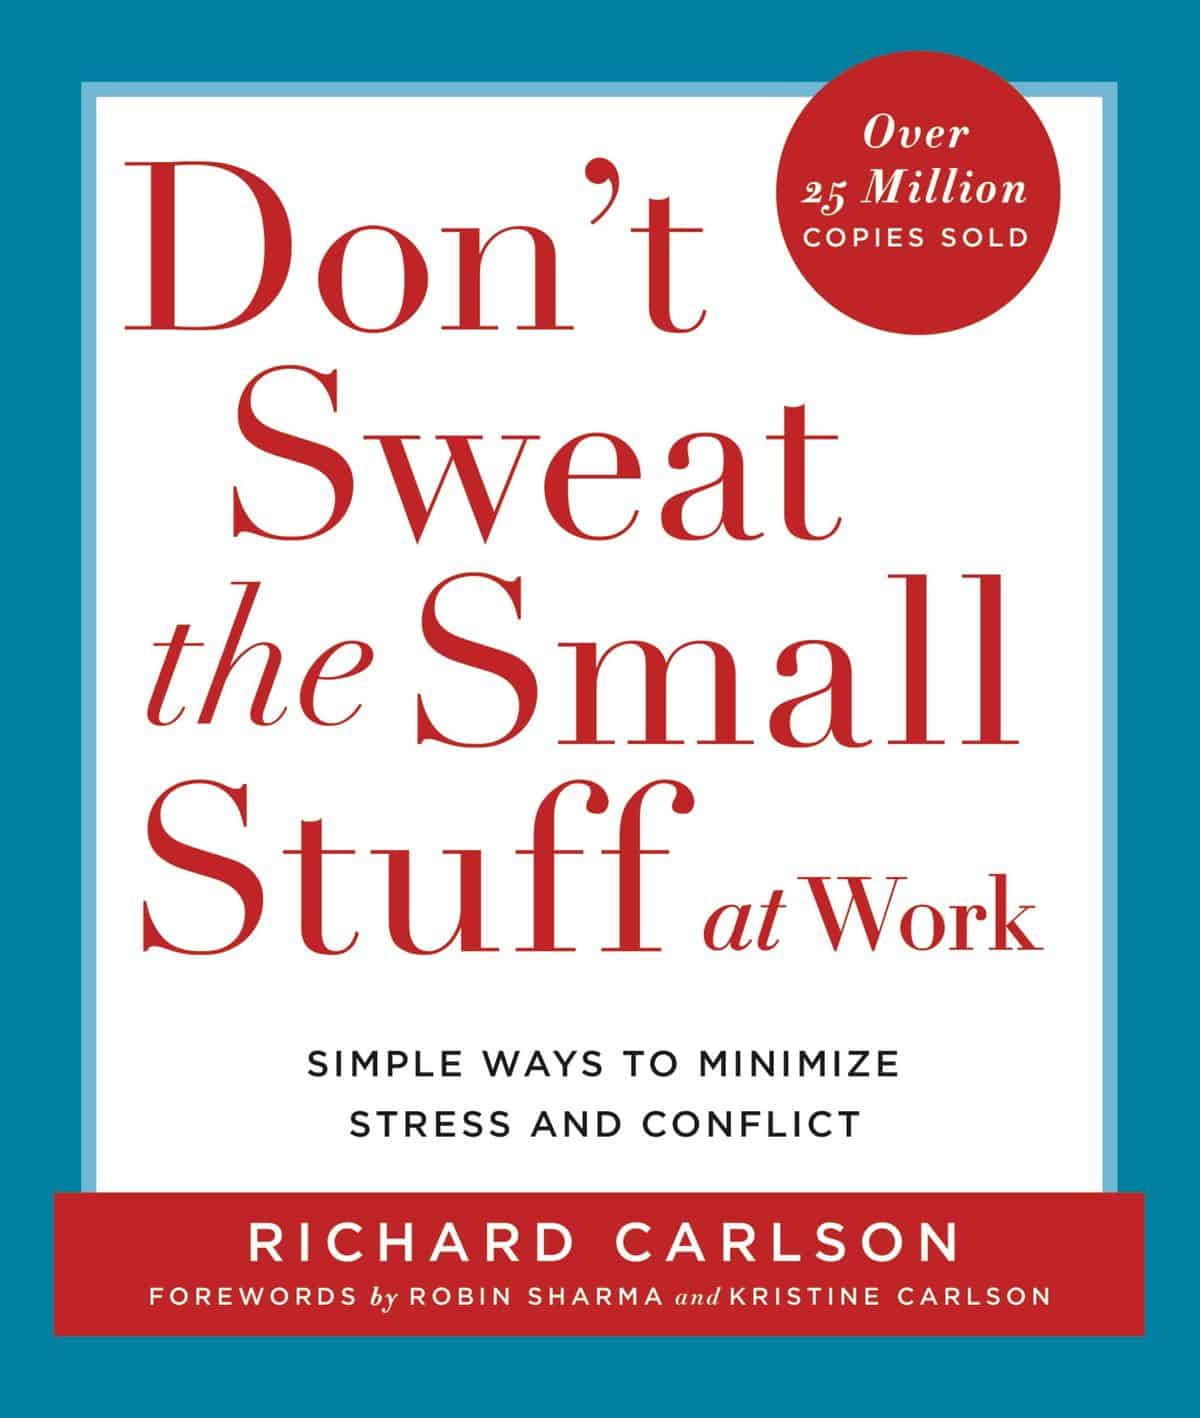 Don’t Sweat the Small Stuff, by Richard Carlson - Inspirational Book